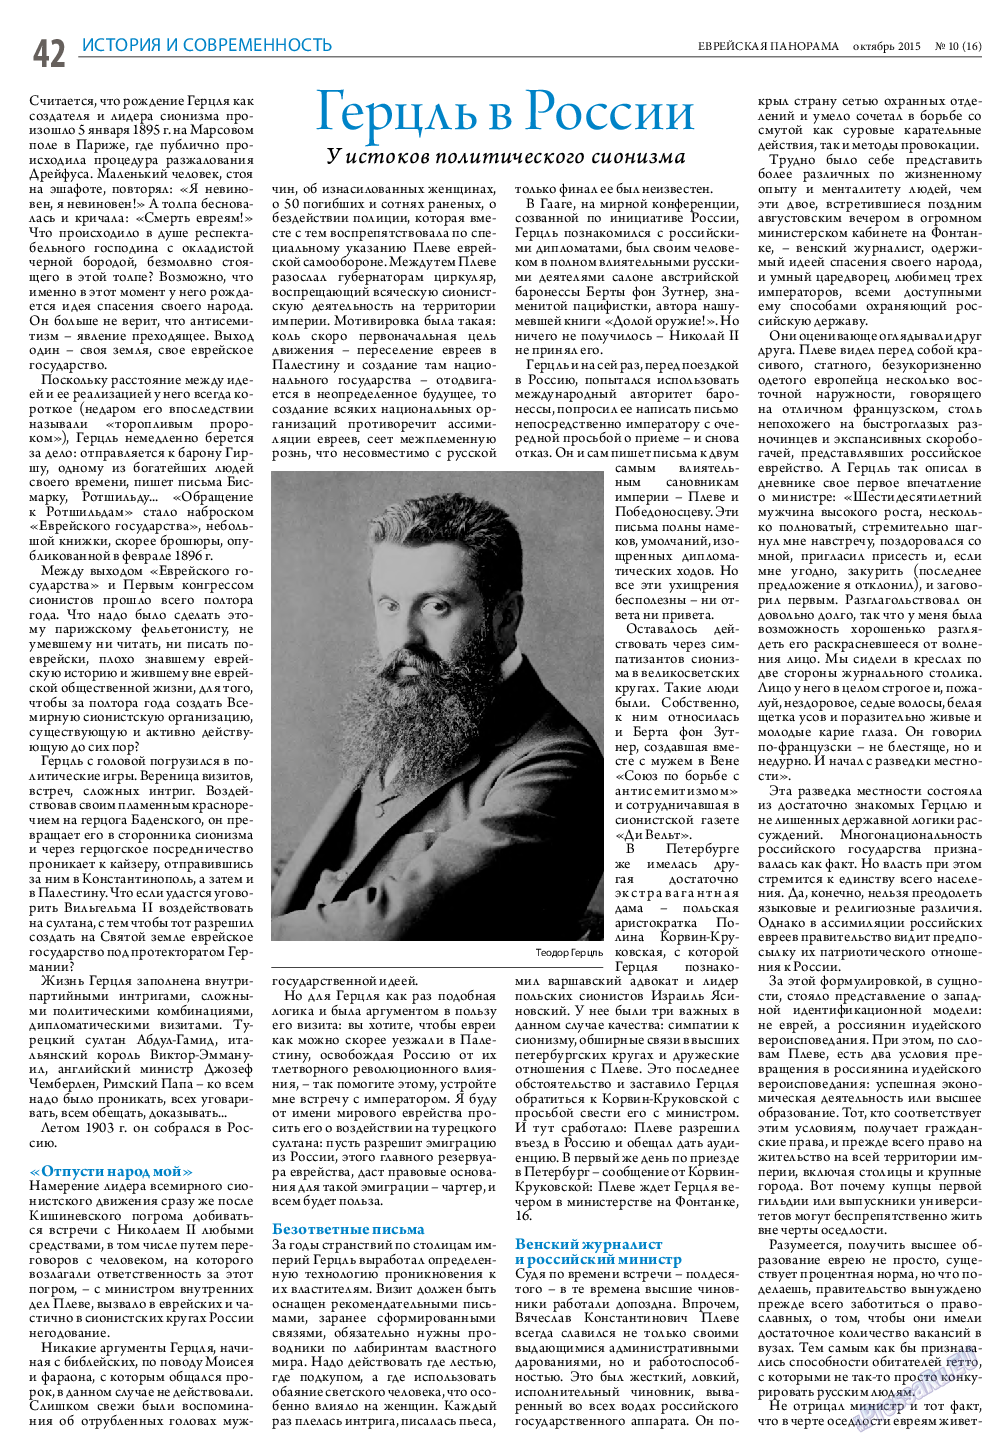 Еврейская панорама, газета. 2015 №10 стр.42